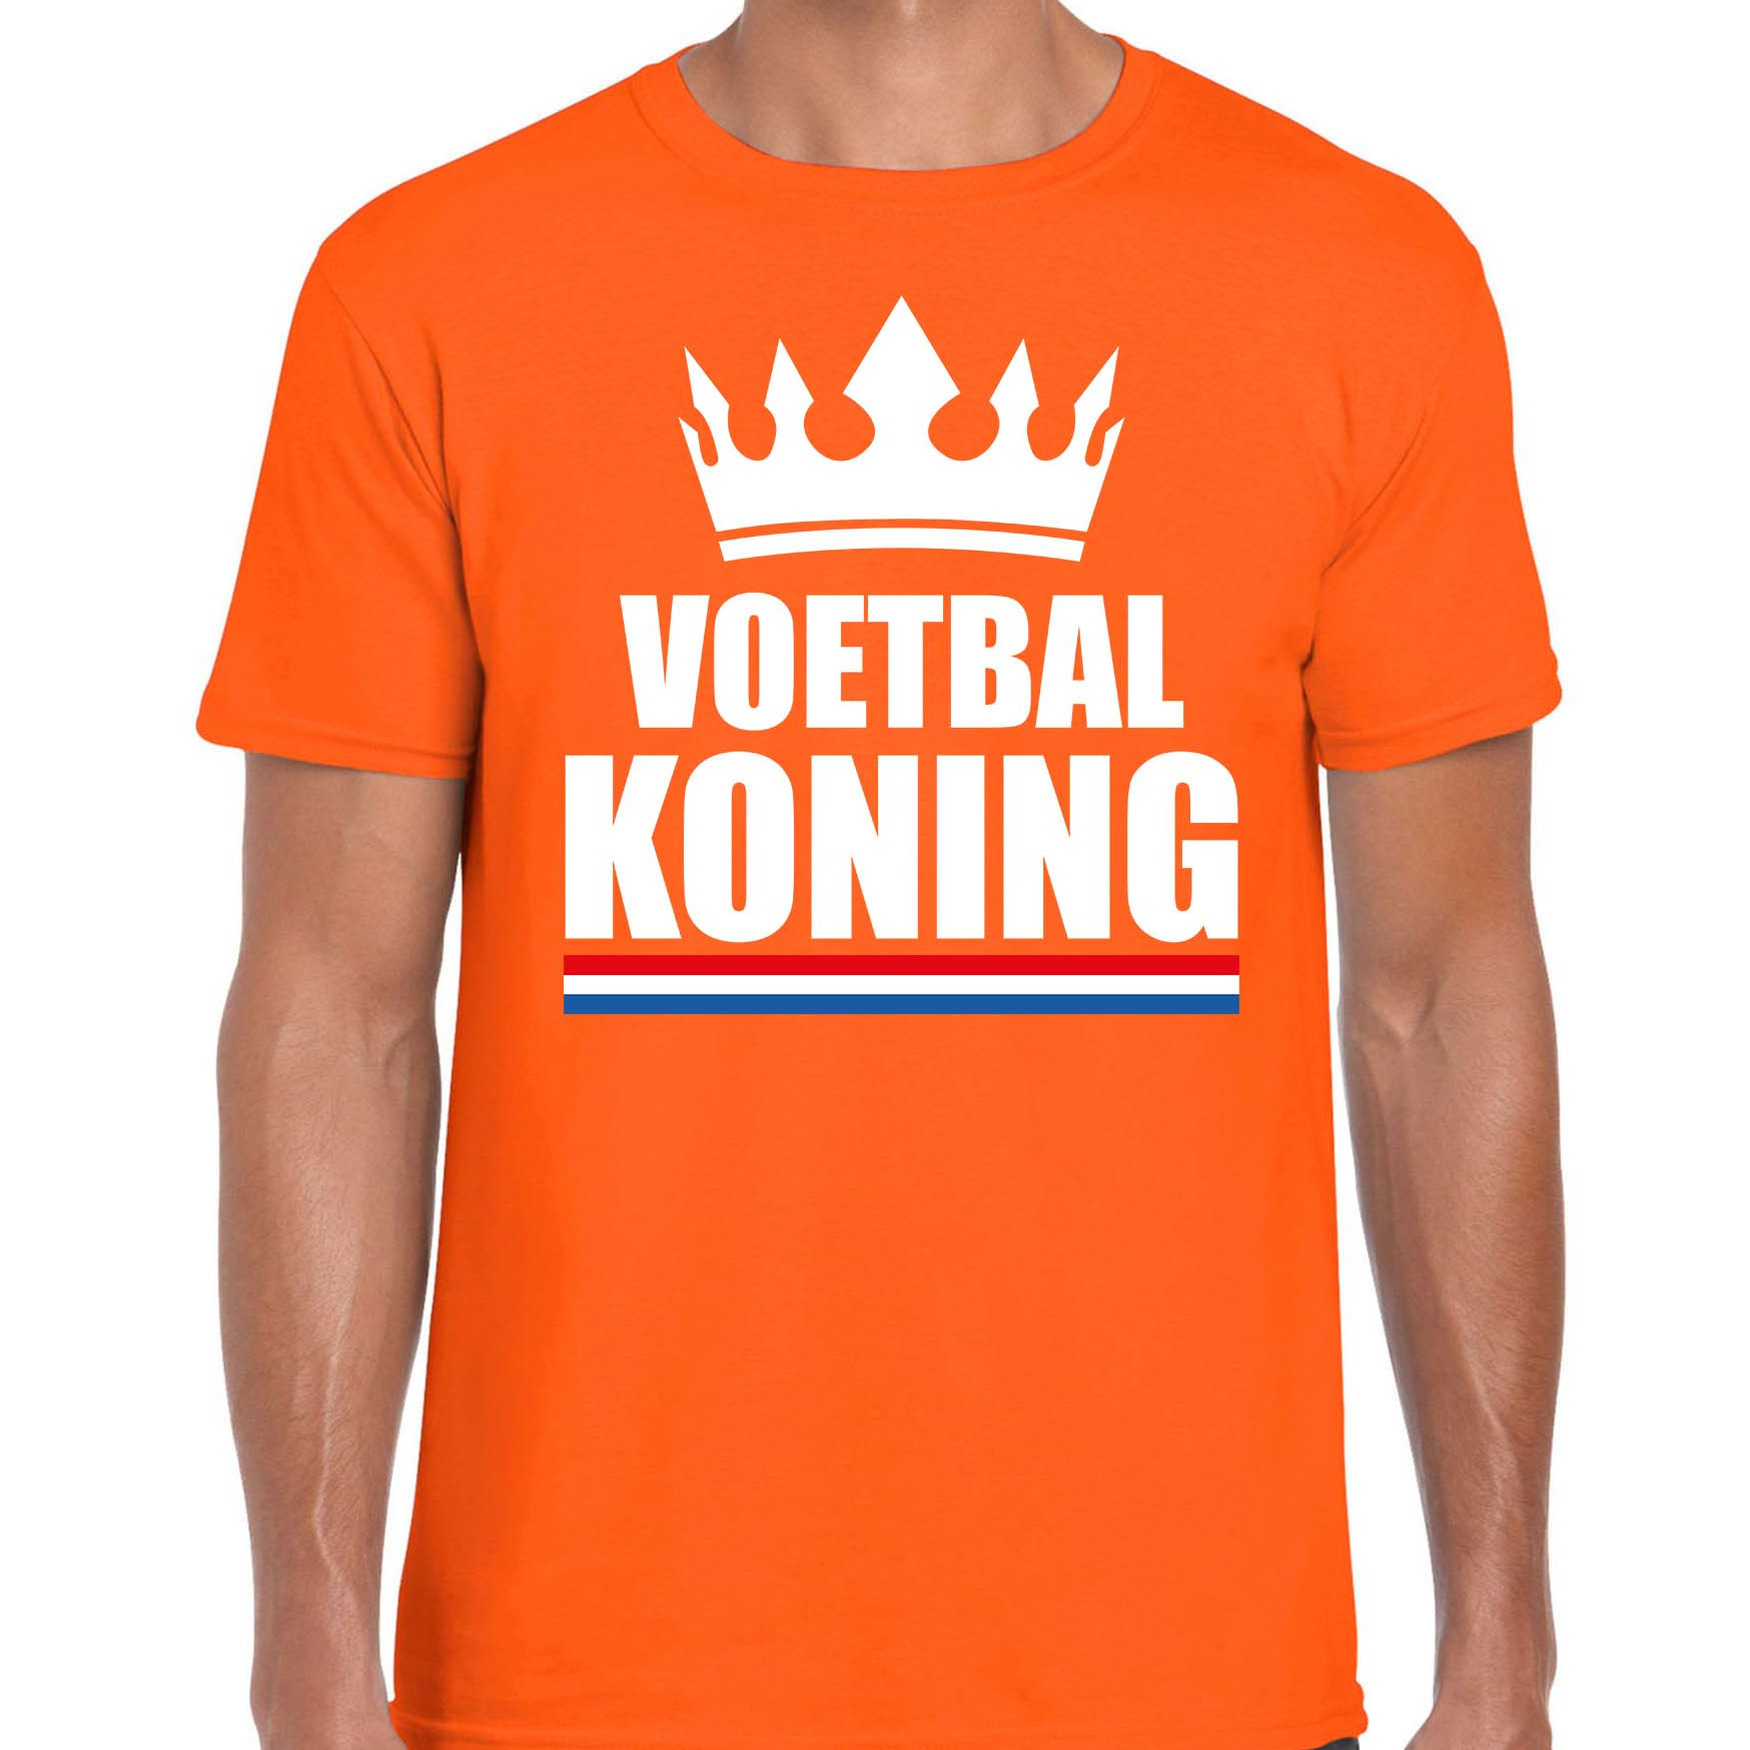 Voetbal koning t-shirt oranje heren Sport-hobby shirts